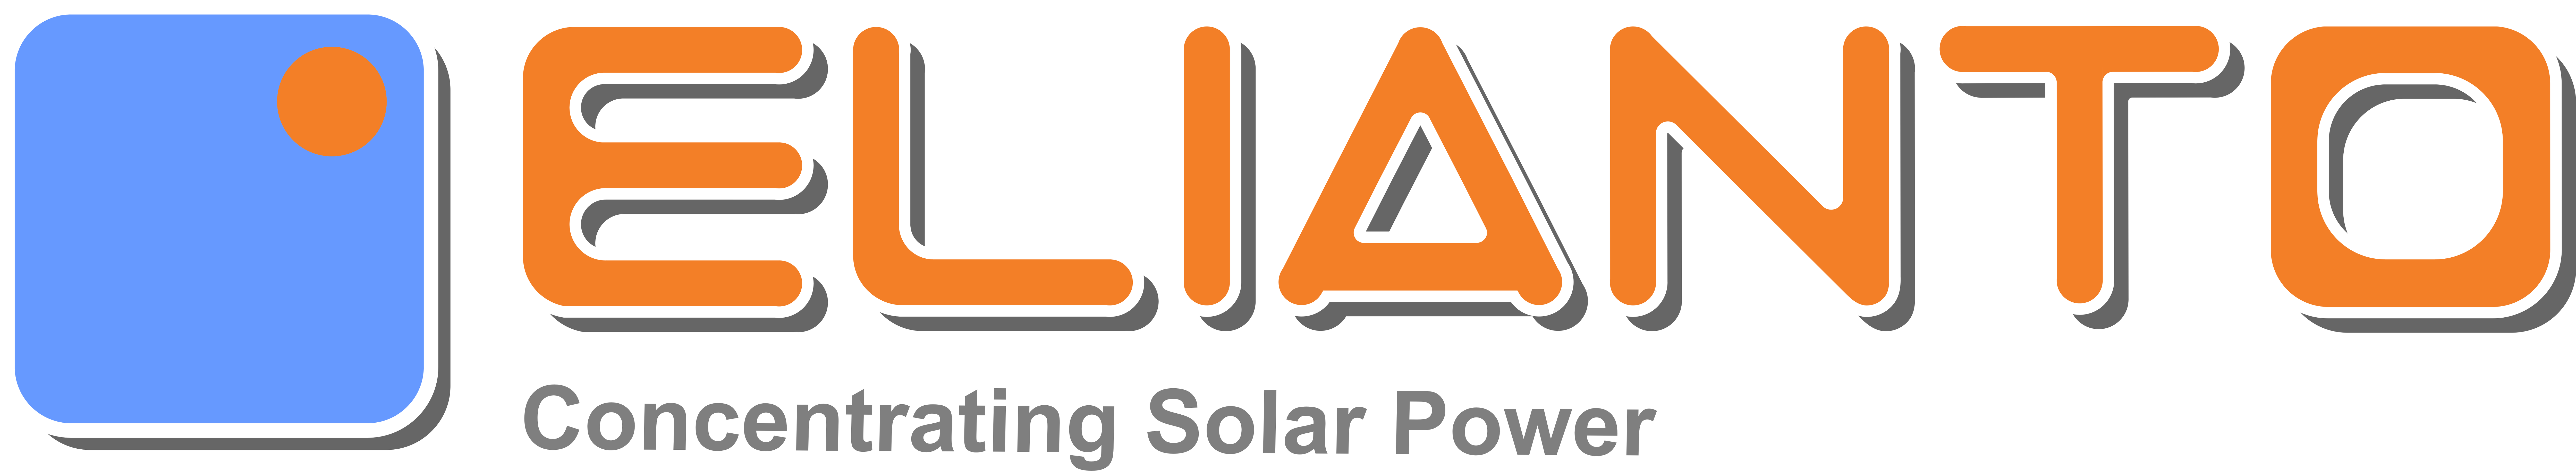 Elianto S.r.l. Concentrating Solar Power